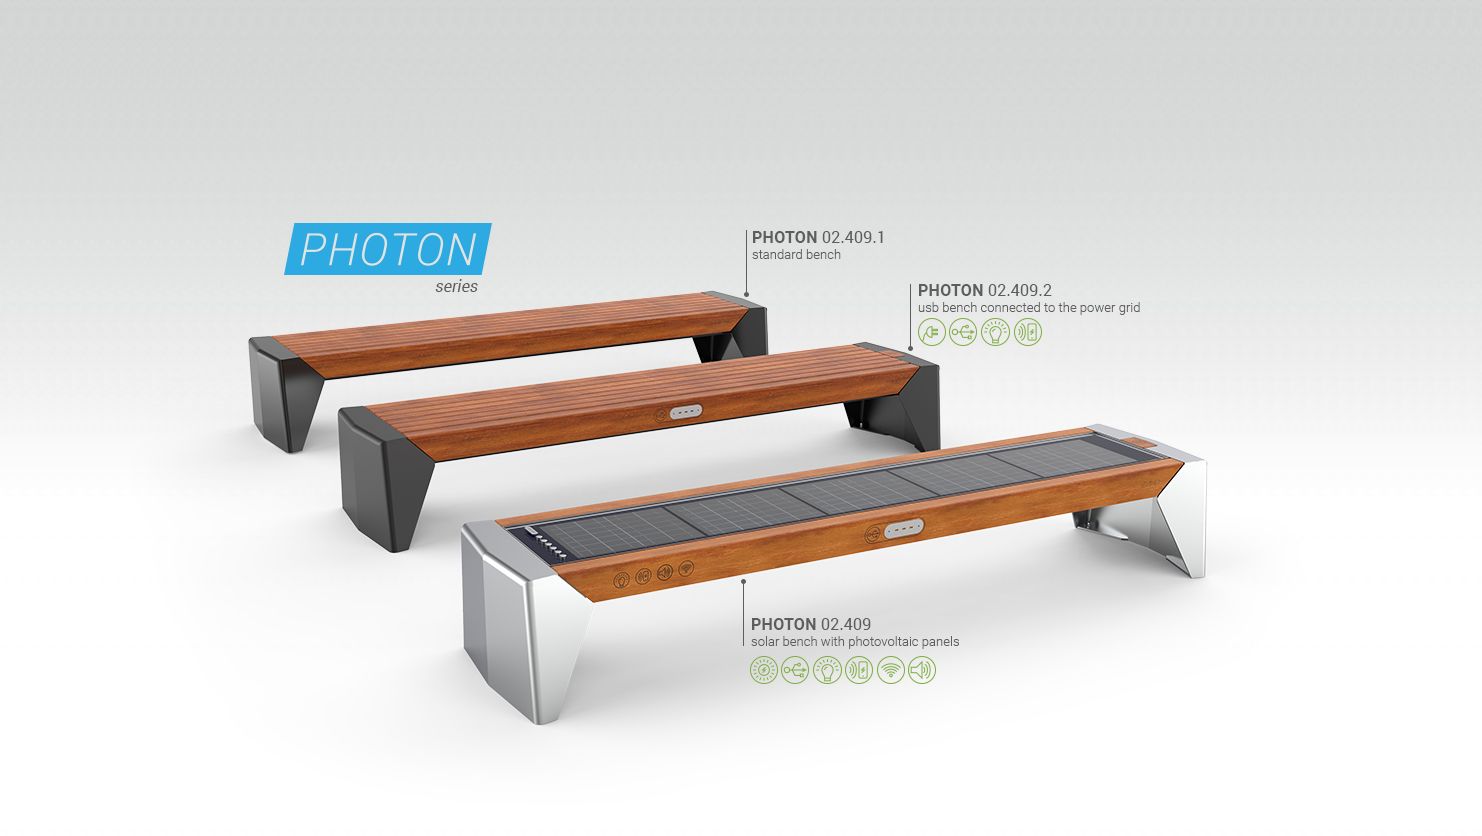 Photon series | ZANO Street Furniture